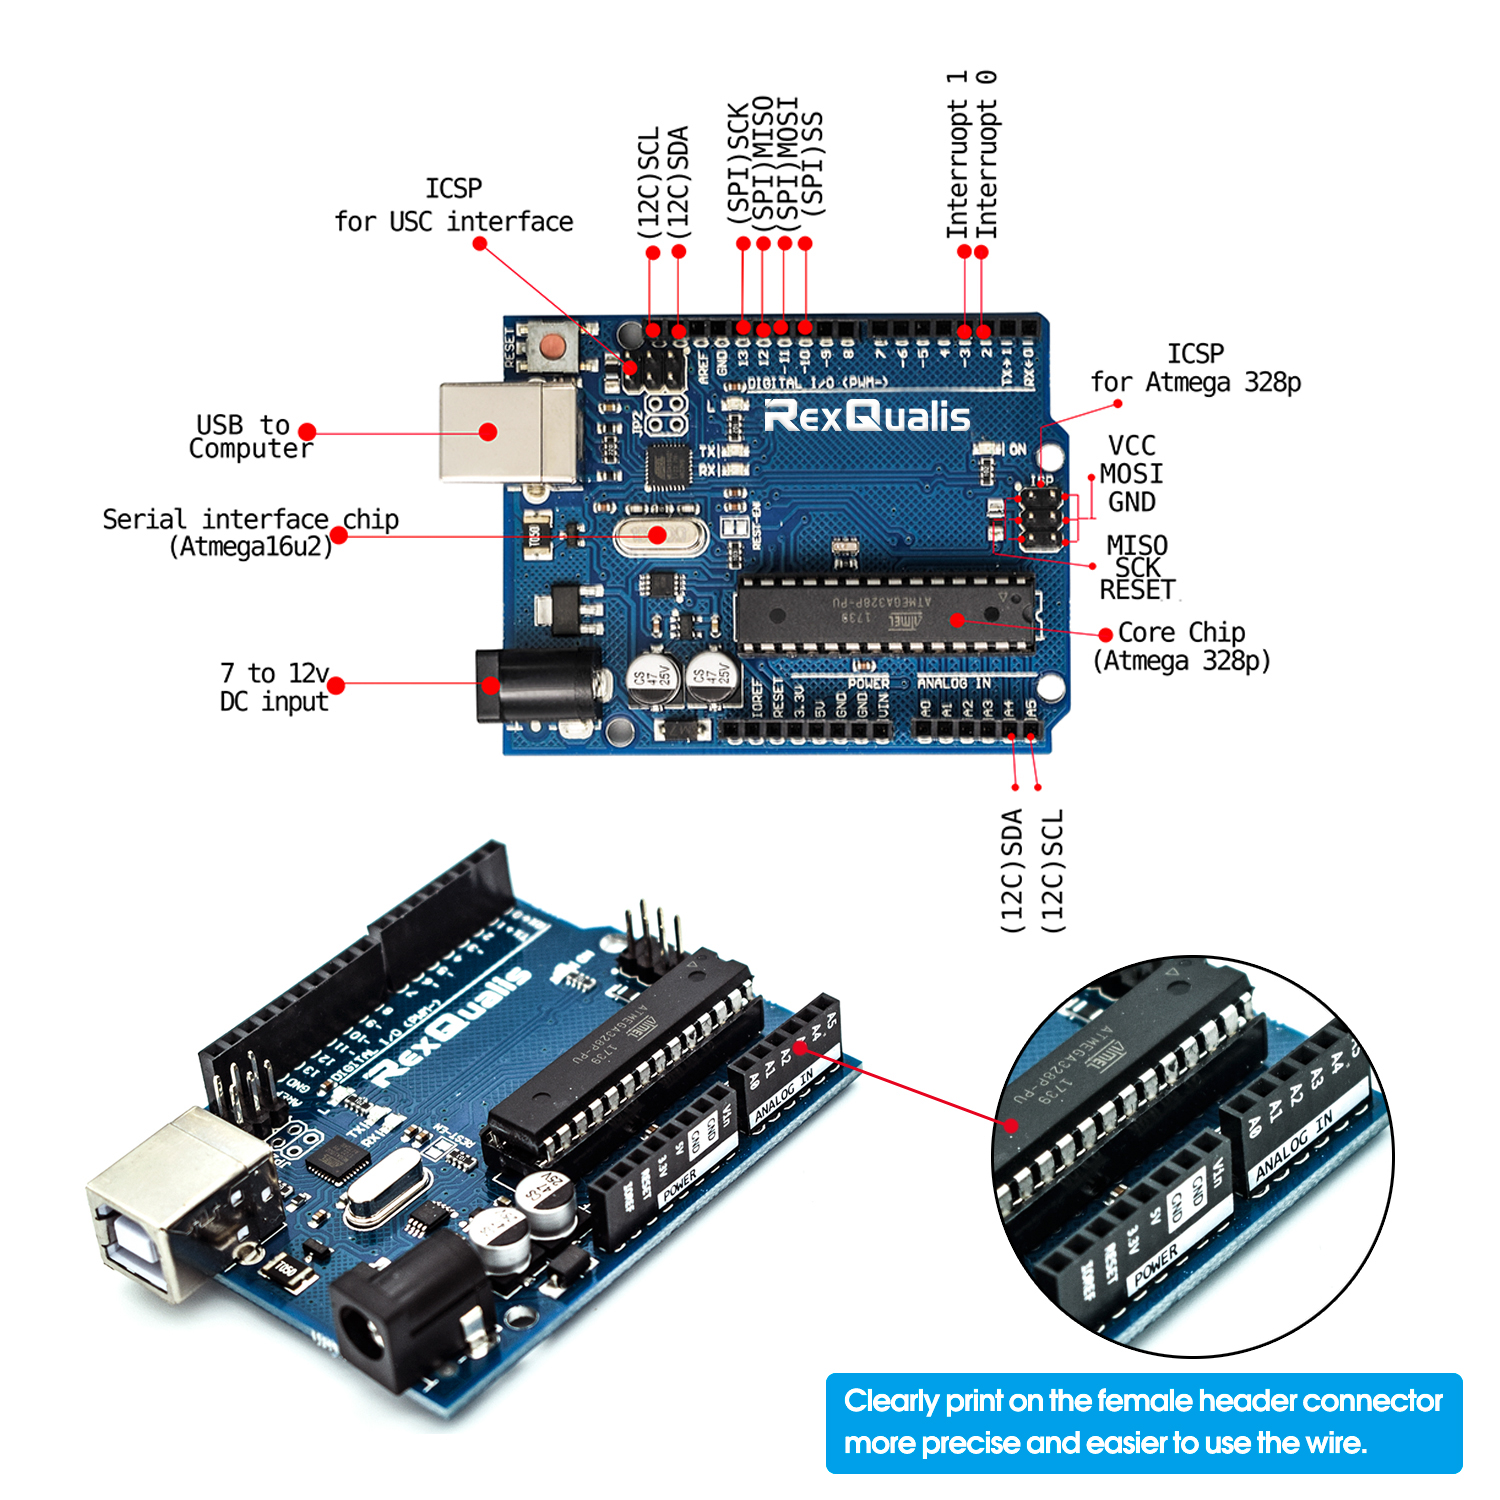 Arduino UNO R3  YoupiLab Components